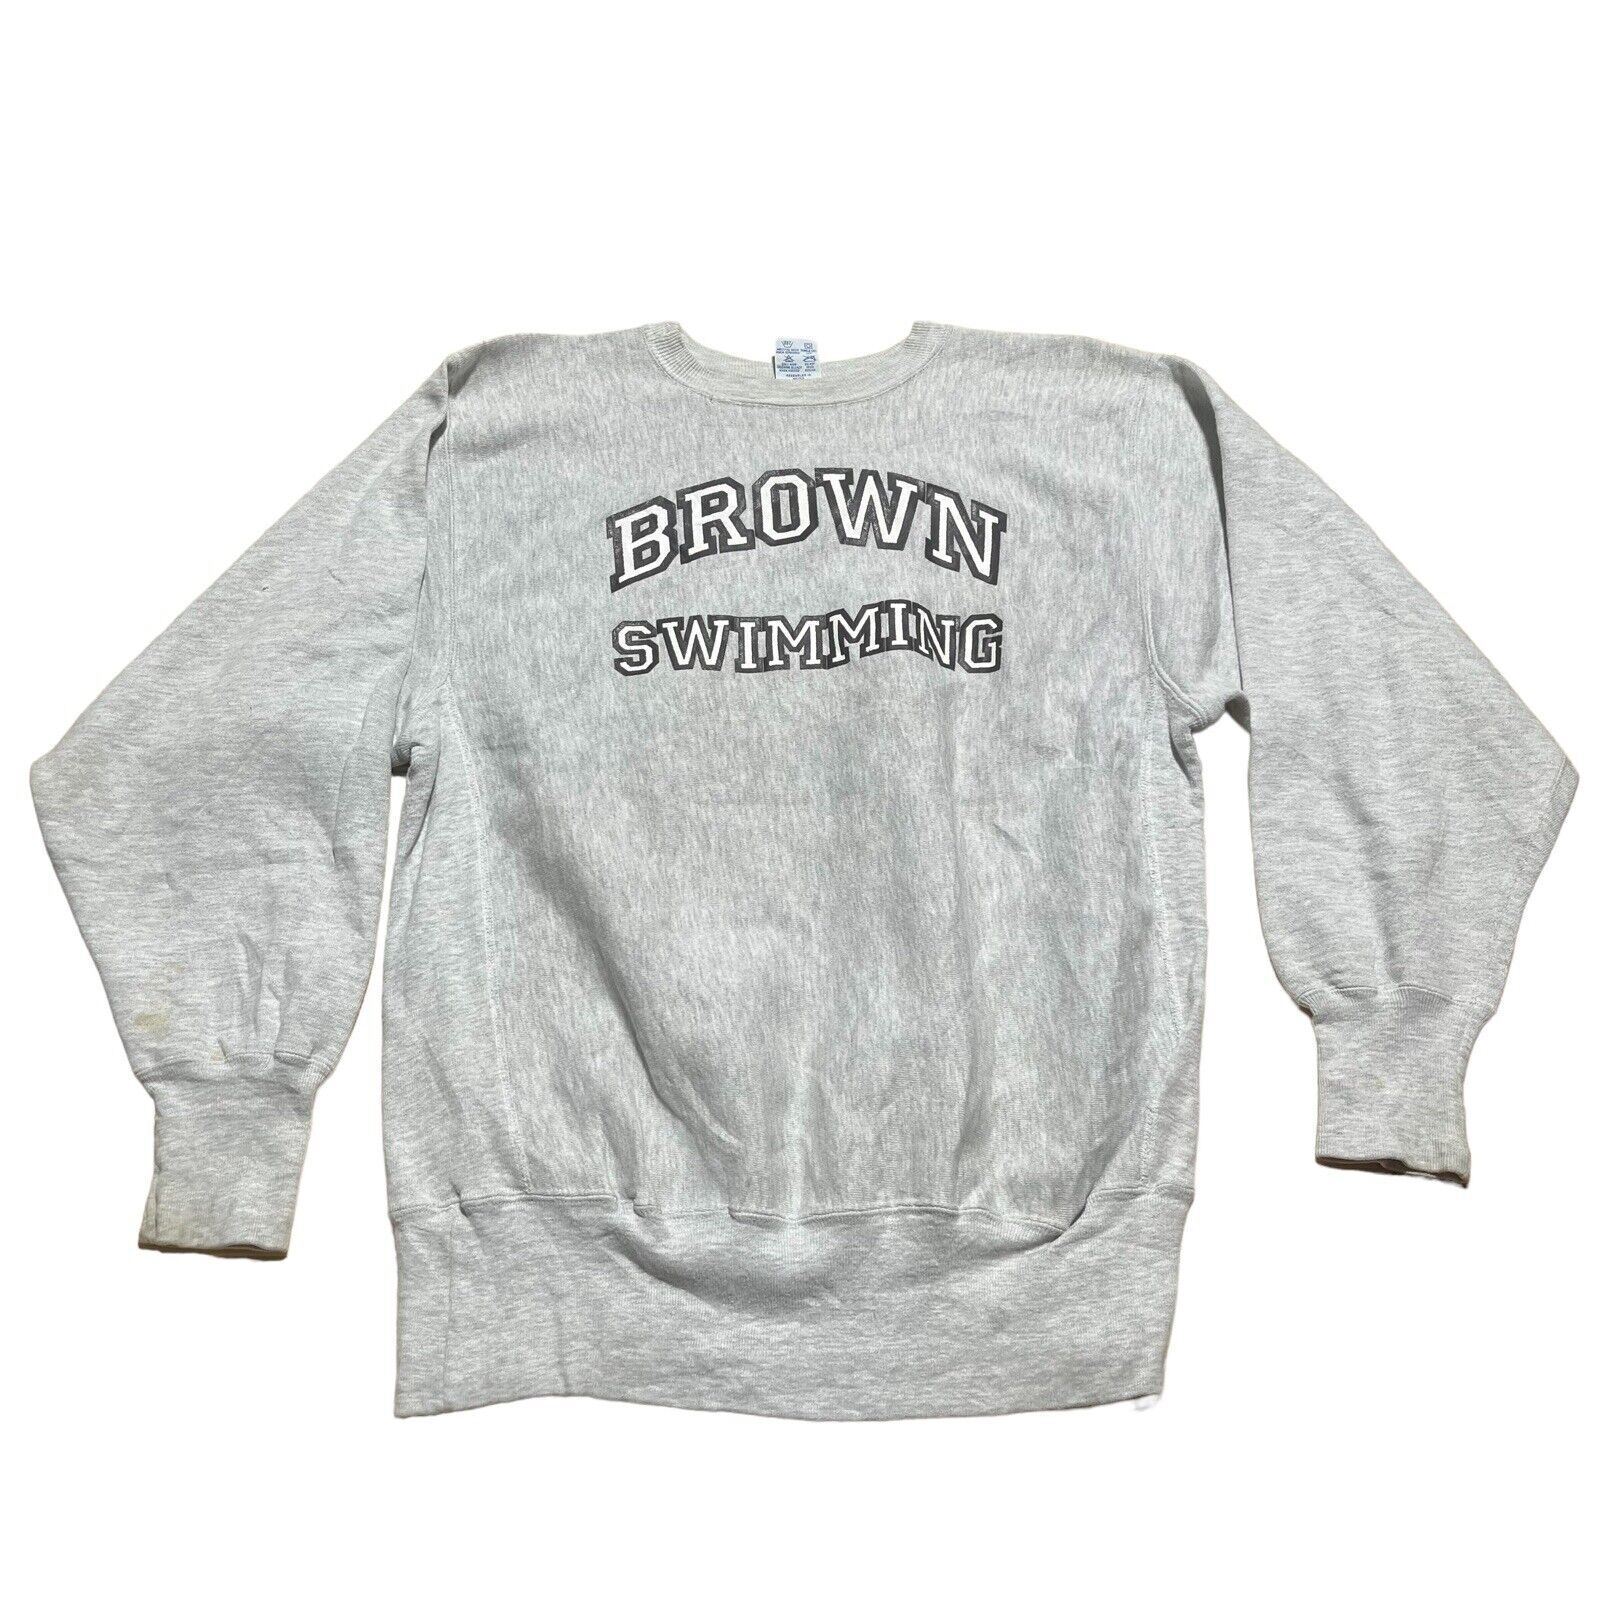 Vintage 90s Champion Reverse Weave Brown University Swimming Sweatshirt  Size XL